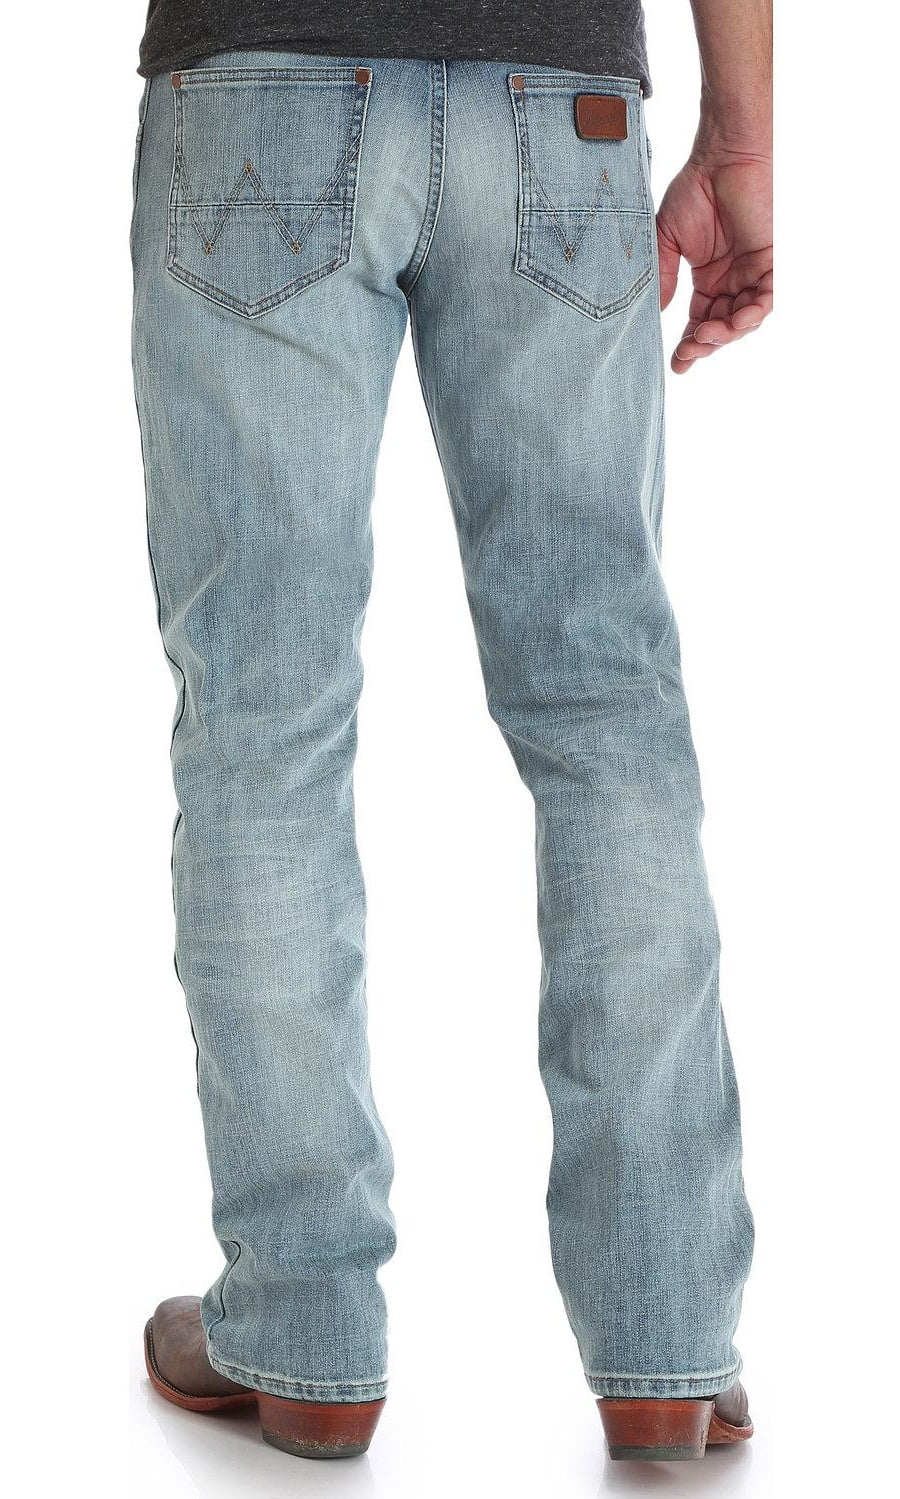 designer mens jeans 34x36